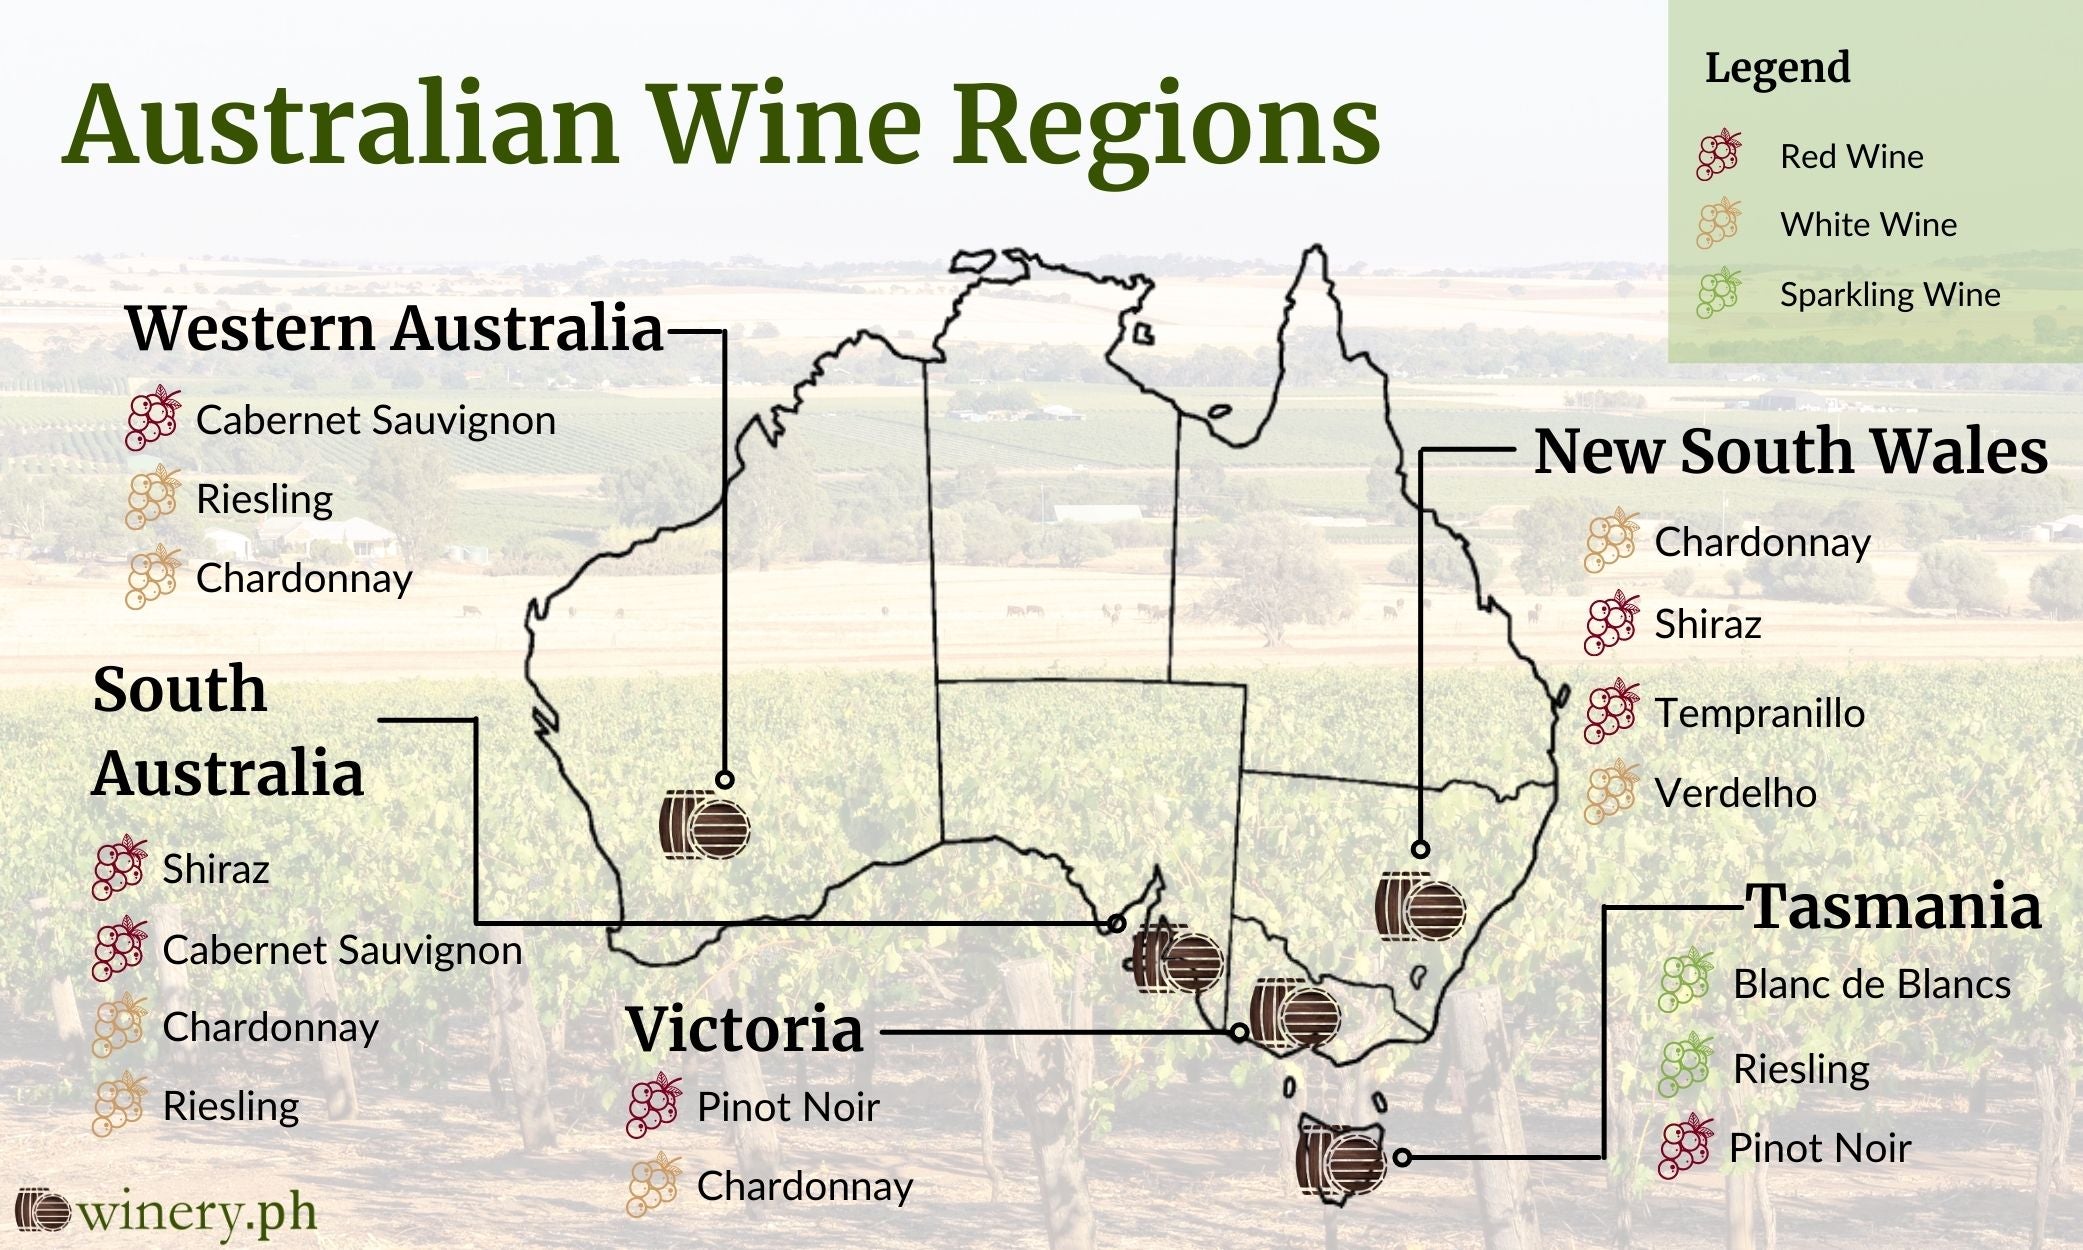 map of australian wine regions and wine varieties